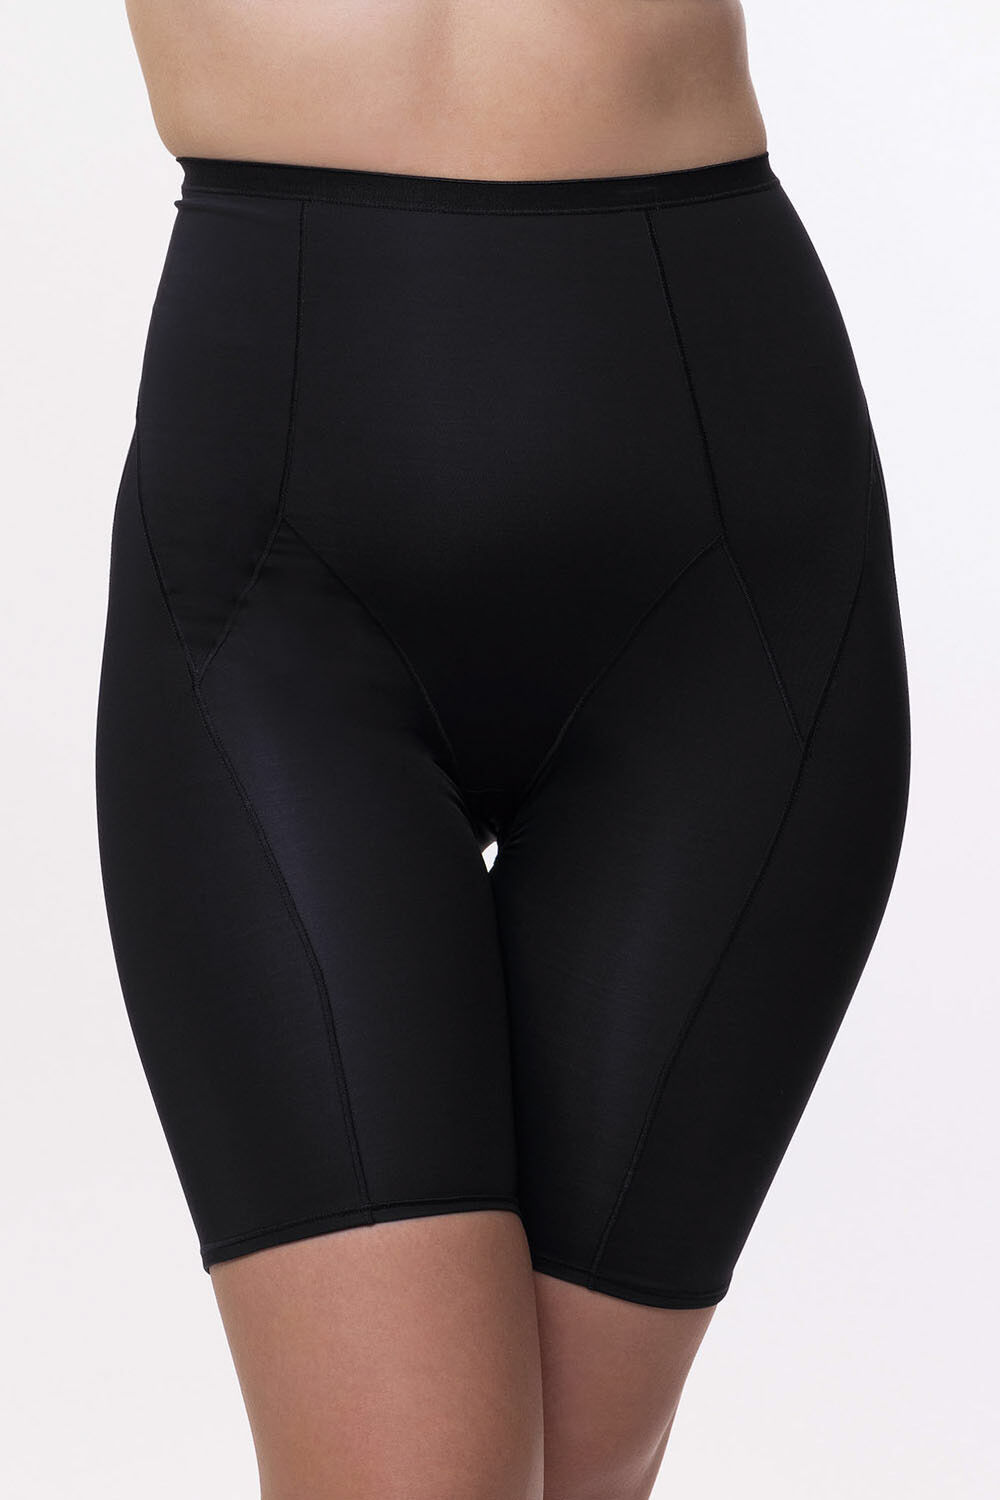 Dorina Black Dori - Shaping Shorts, Size: 8